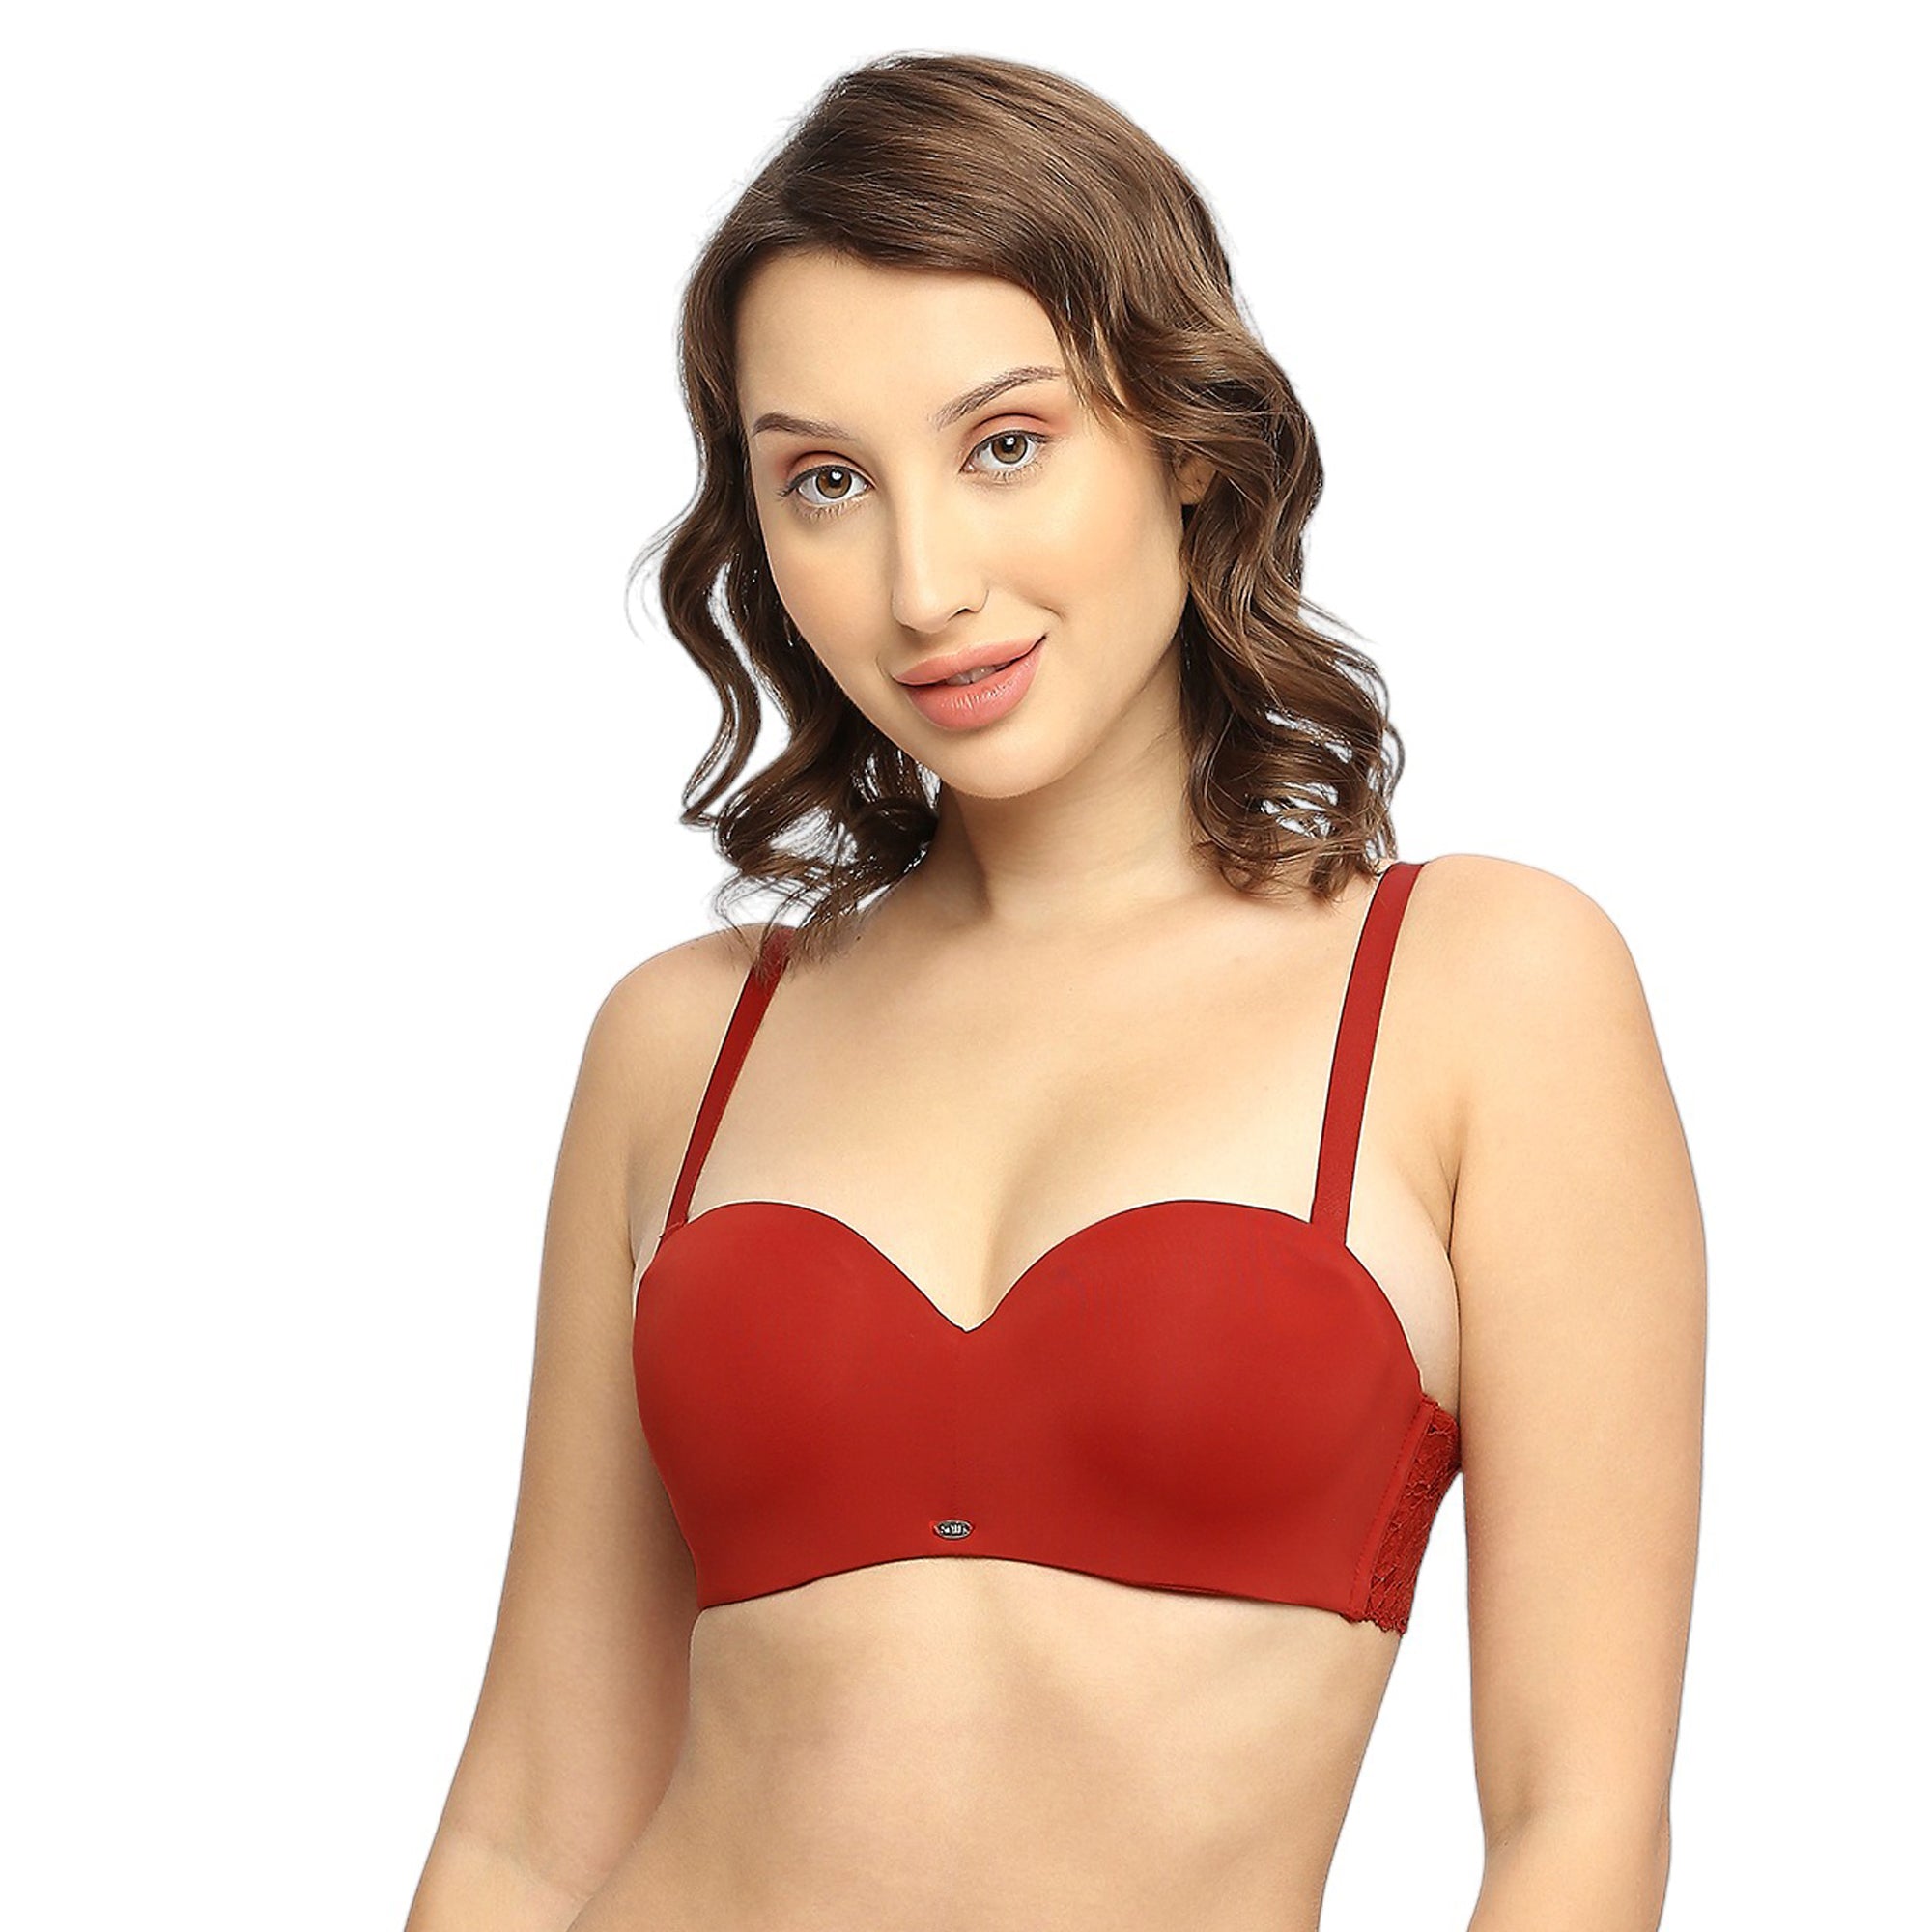 Buy strapless bra online India, Tube bra & Multi ways bras